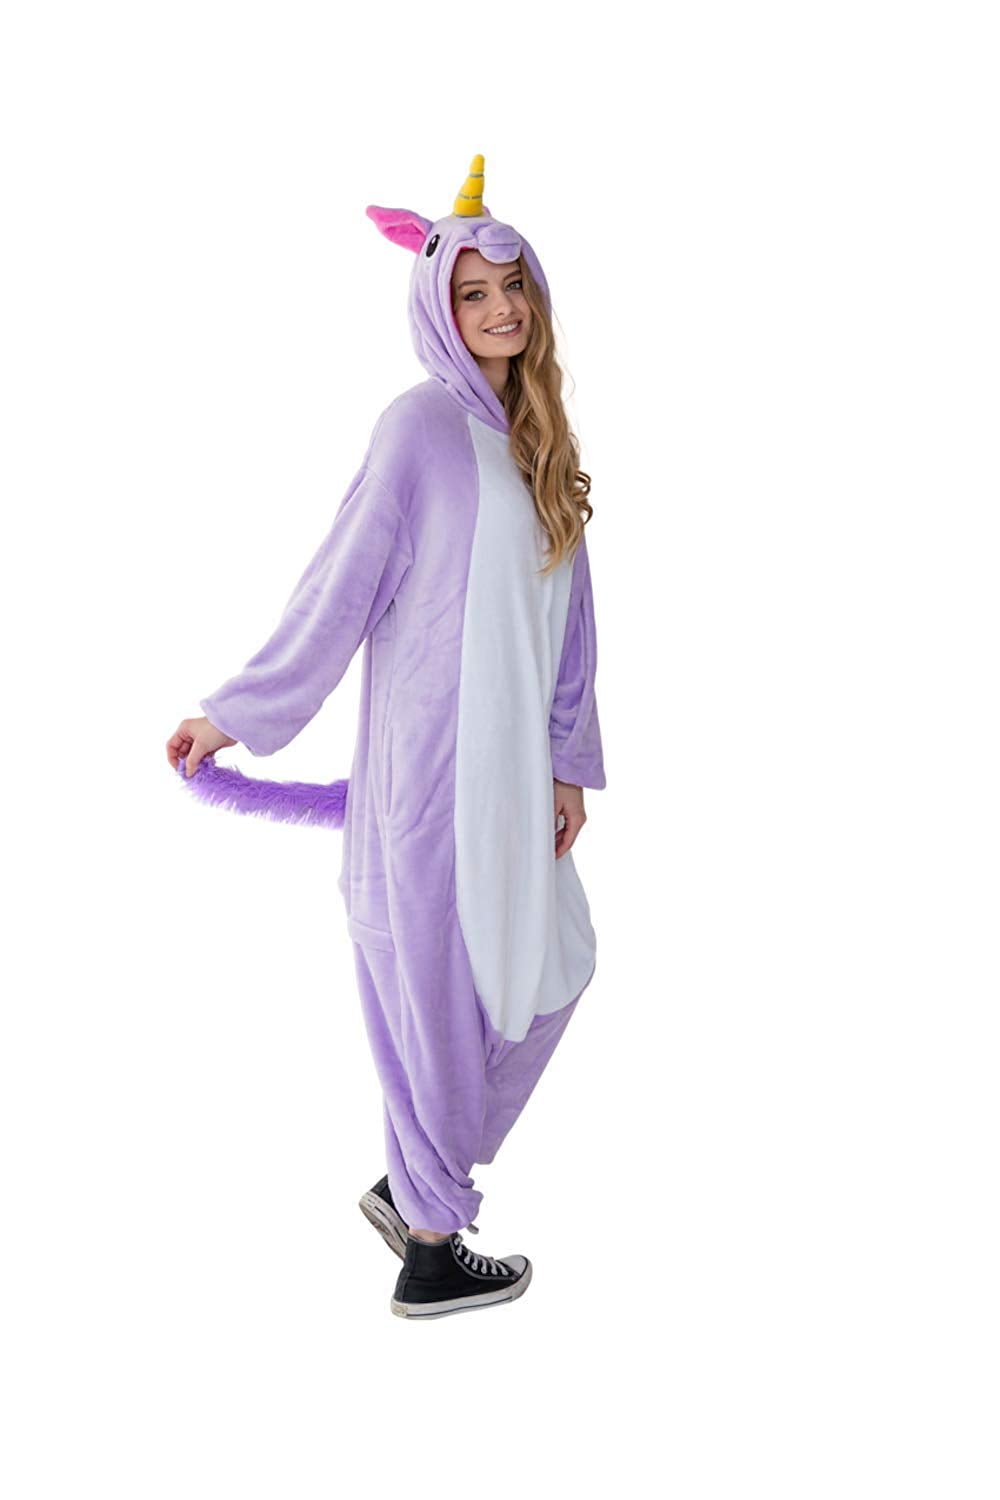 Unicorn Onesie for Kids Animal Pajamas Cosplay Halloween Unisex Costume